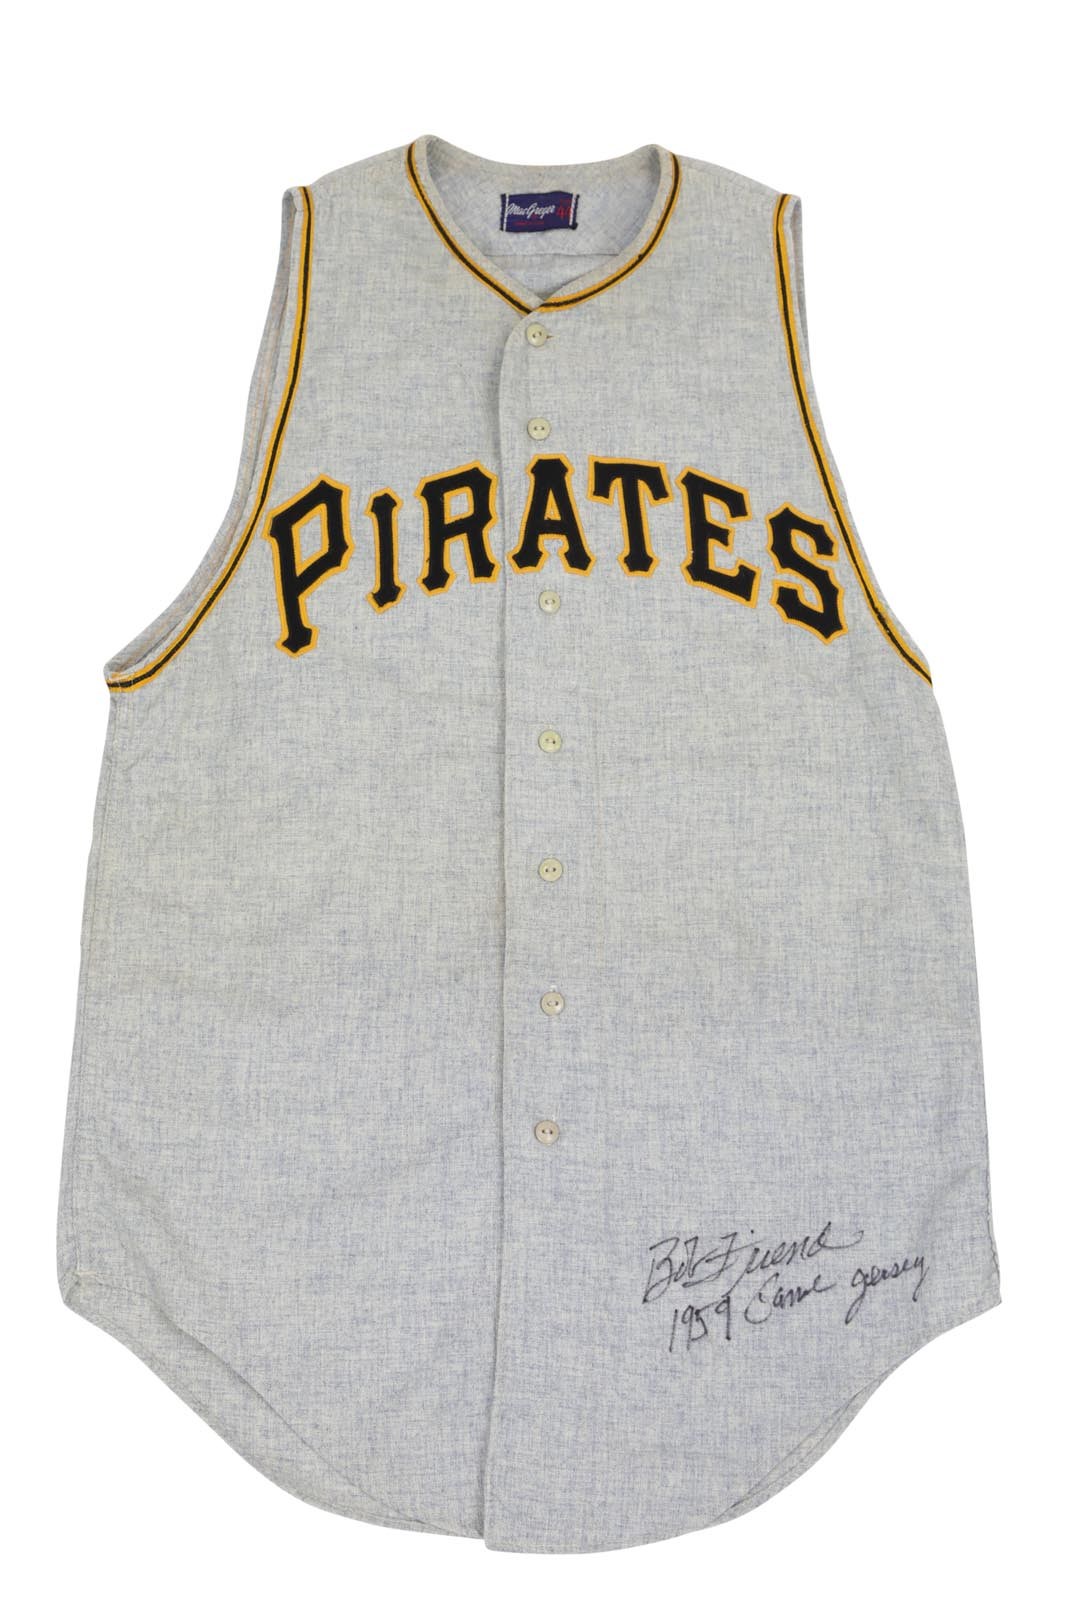 - 1959 Bob Friend Pittsburgh Pirates Game Worn Jersey